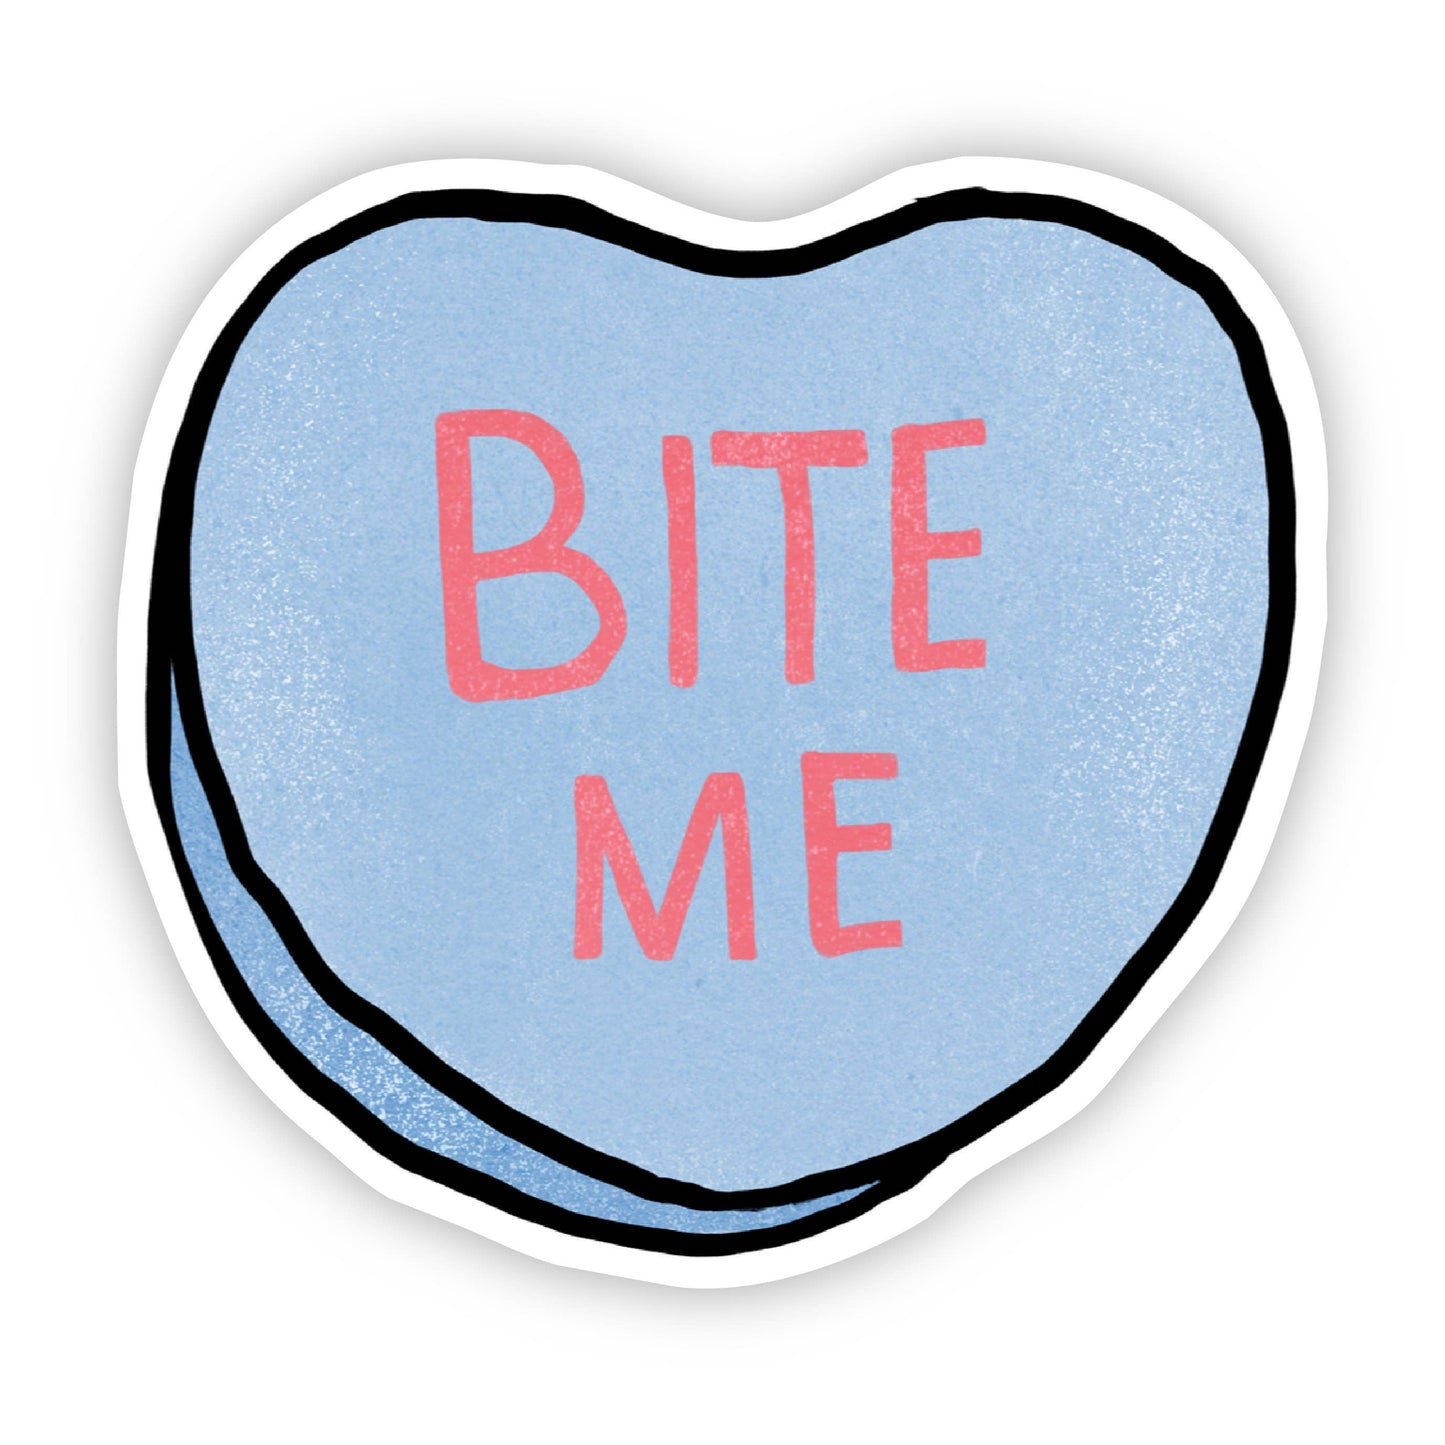 Bite Me Heart Sticker